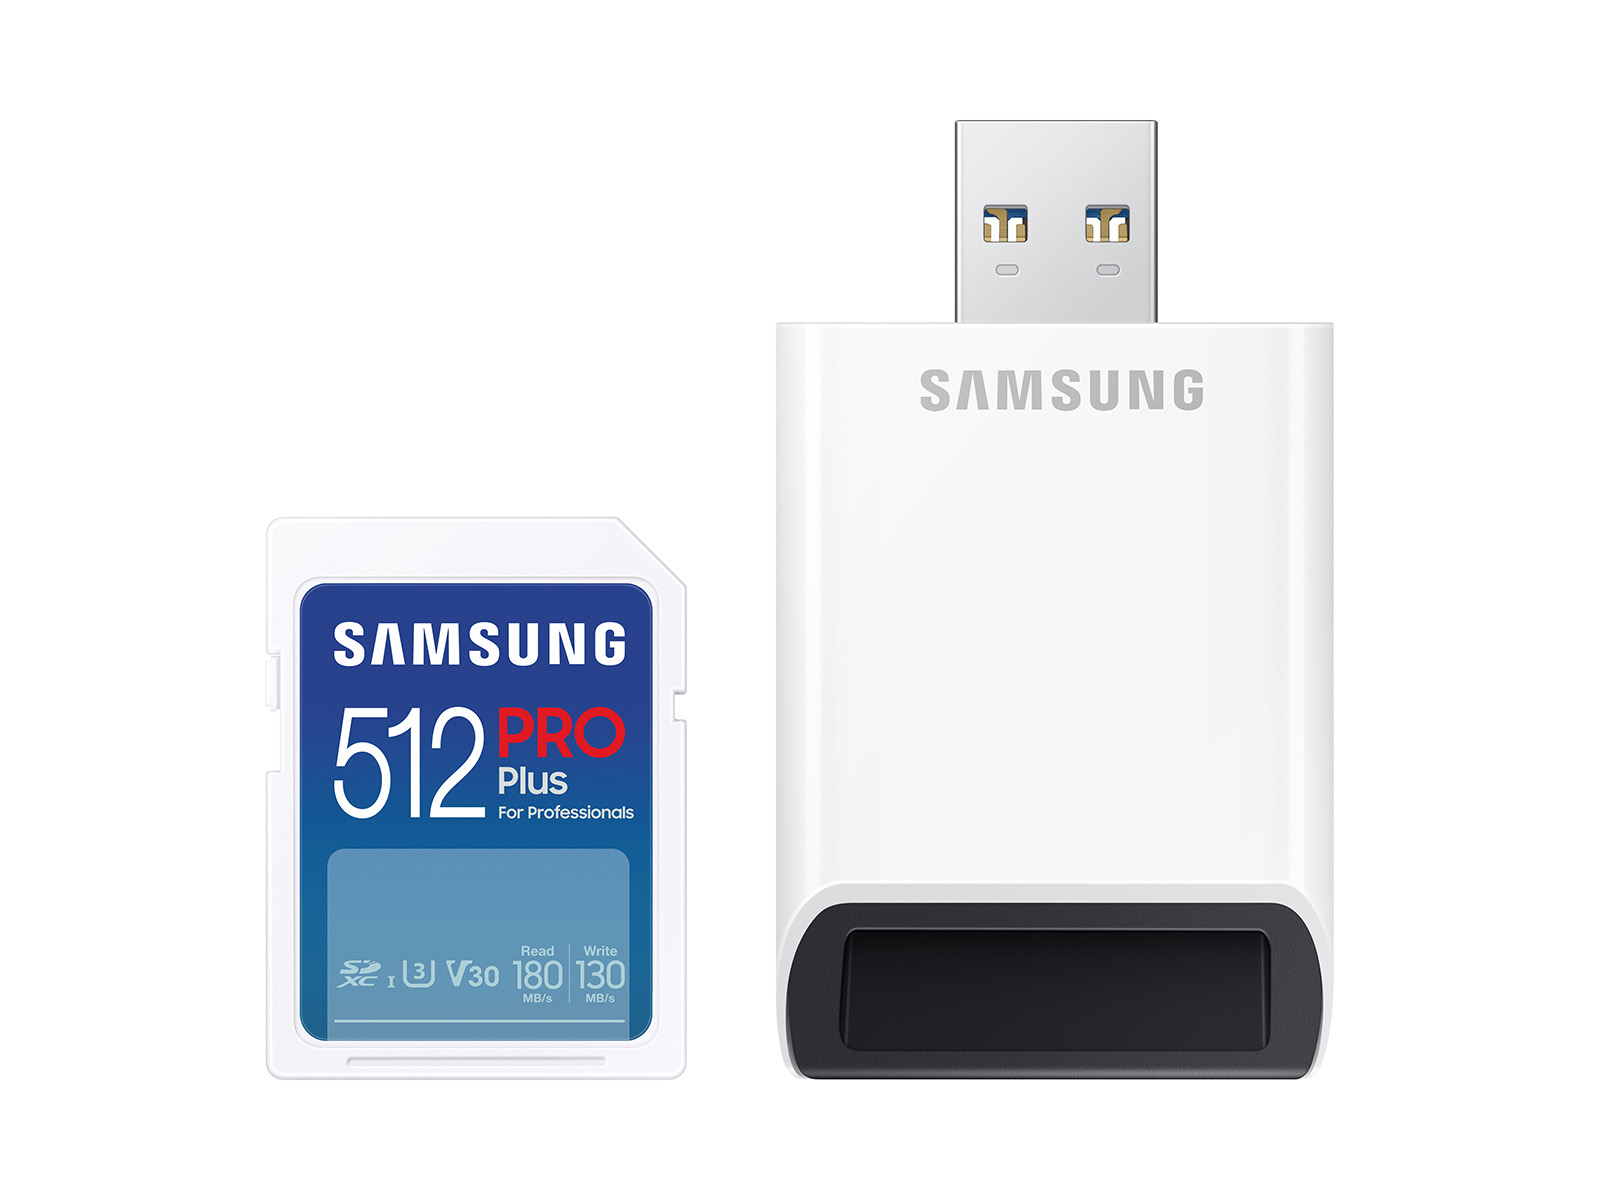 Uplifted hovedpine smerte SSD 850 PRO 2.5" SATA III 512GB Memory & Storage - MZ-7KE512BW | Samsung US